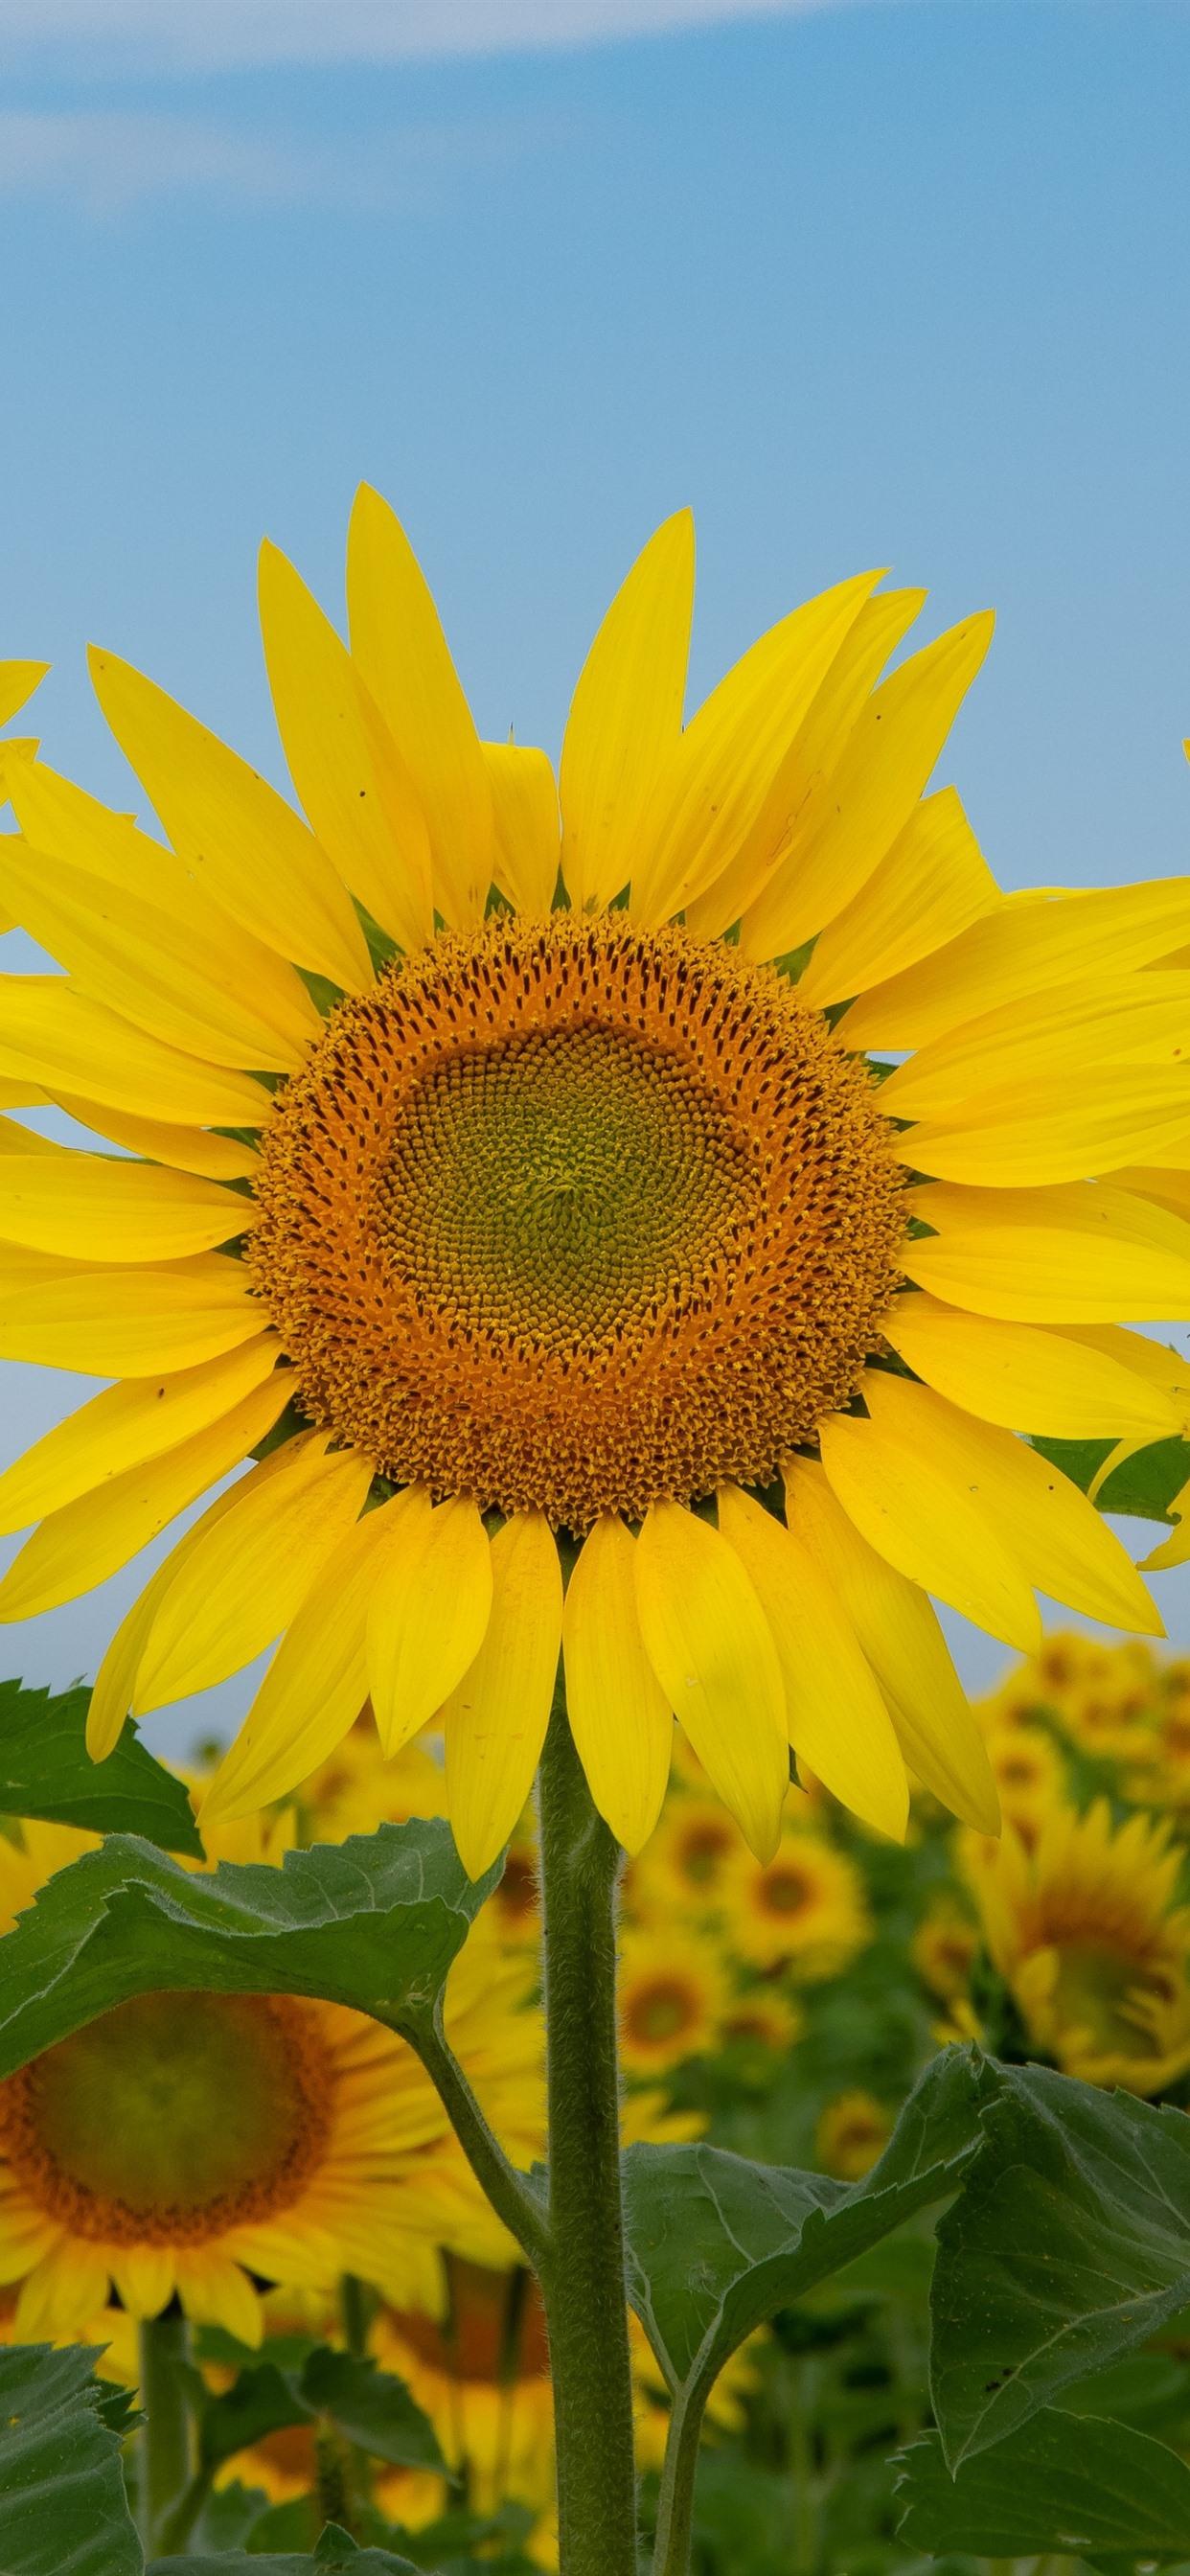 Three sunflowers, summer 1242x2688 iPhone XS Max wallpaper